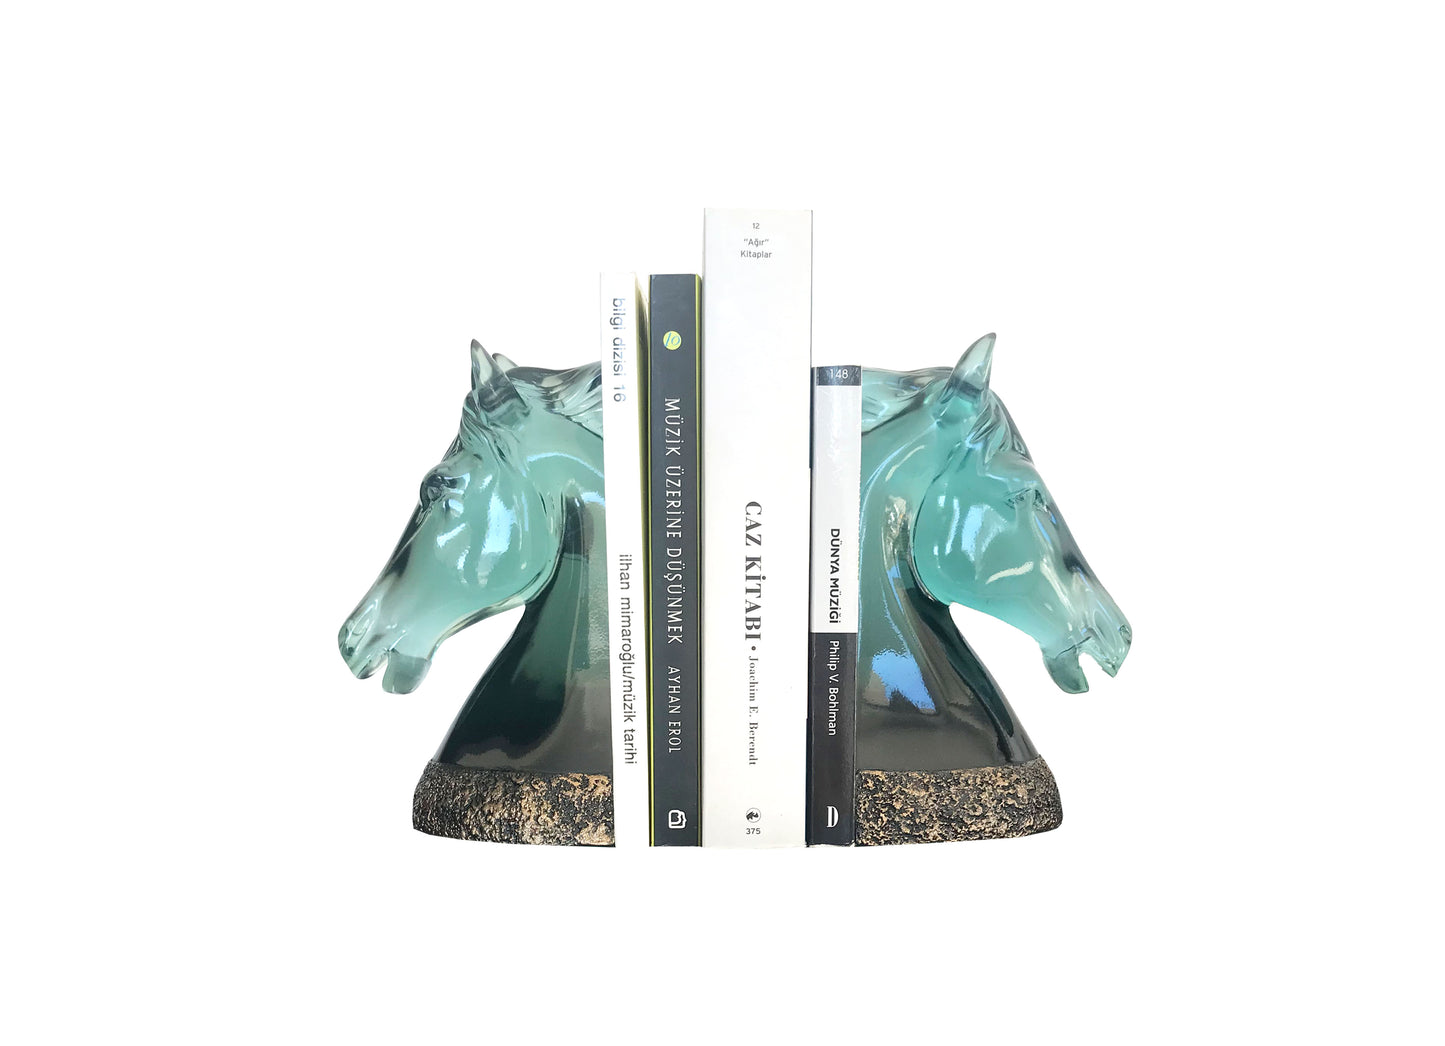 Double Horse Book Holder Resin Figure, Modern Epoxy Home Decor